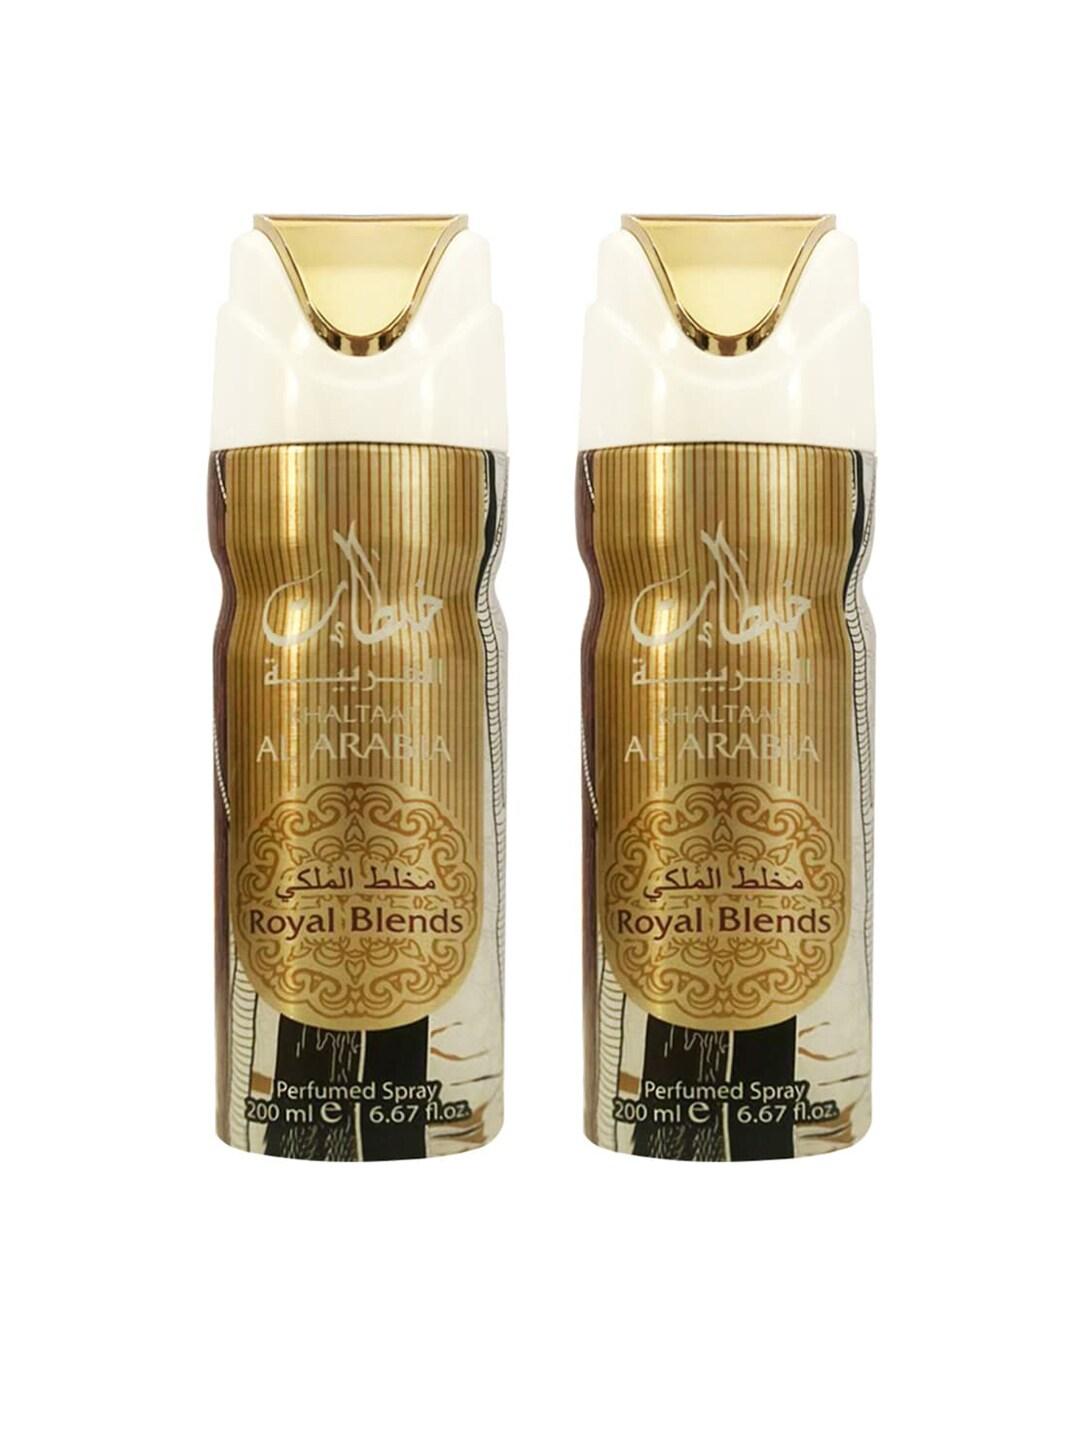 Lattafa Unisex Khaltaat Al Arabia Royal Blend Perfumed Bodyspray,200ml (pack of 2)